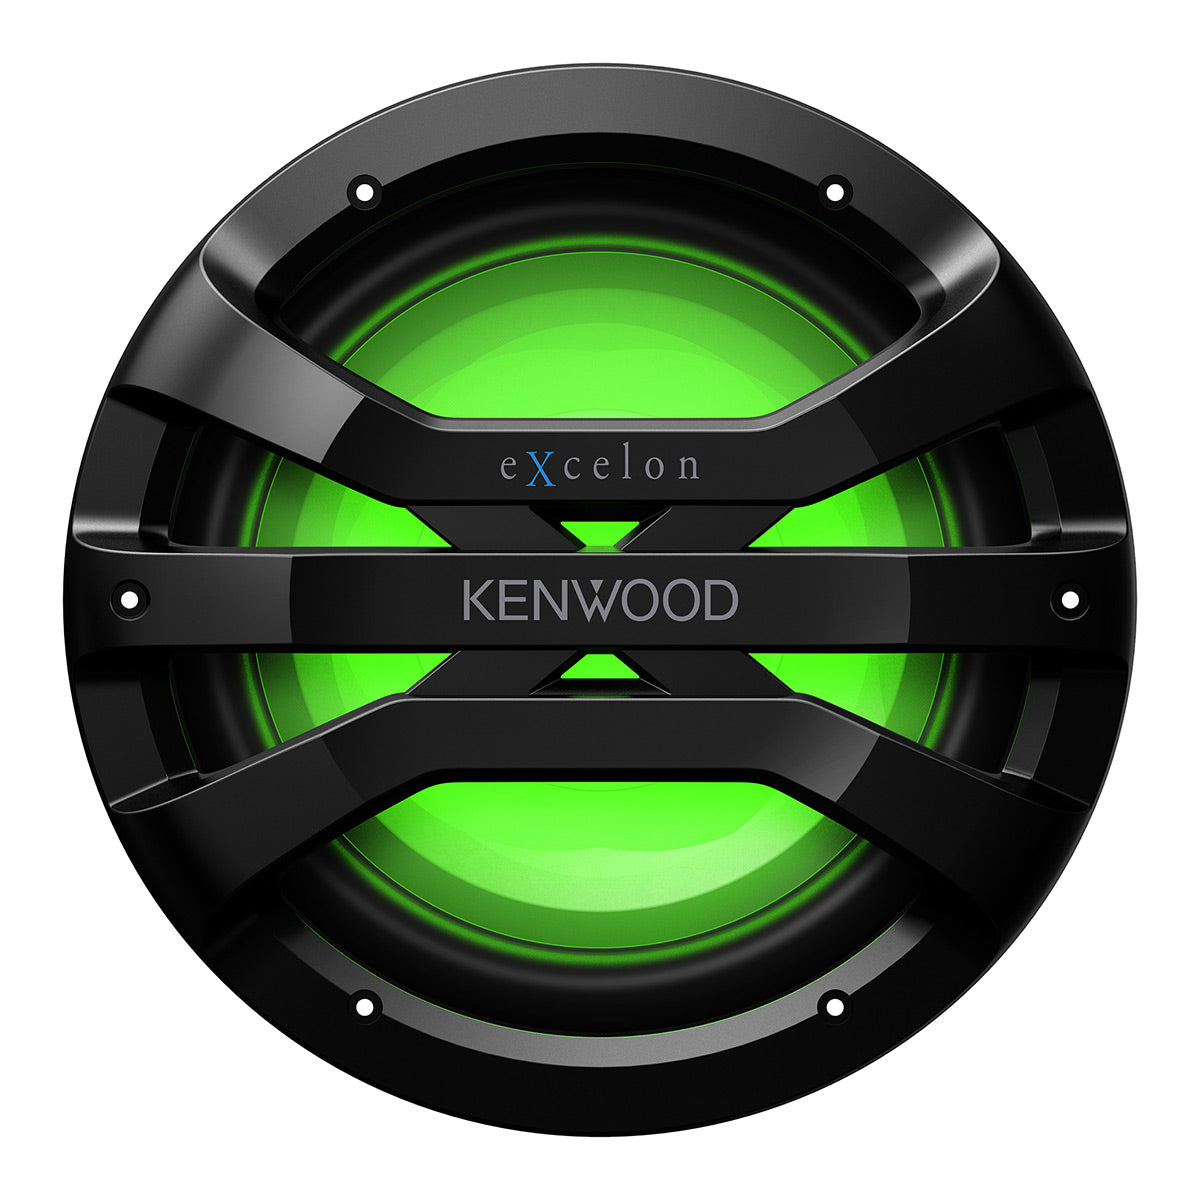 Kenwood XM1041BL eXcelon Motorsports 10" All-Weather Outdoor Subwoofer with Adjustable Lighting - Each (Black)